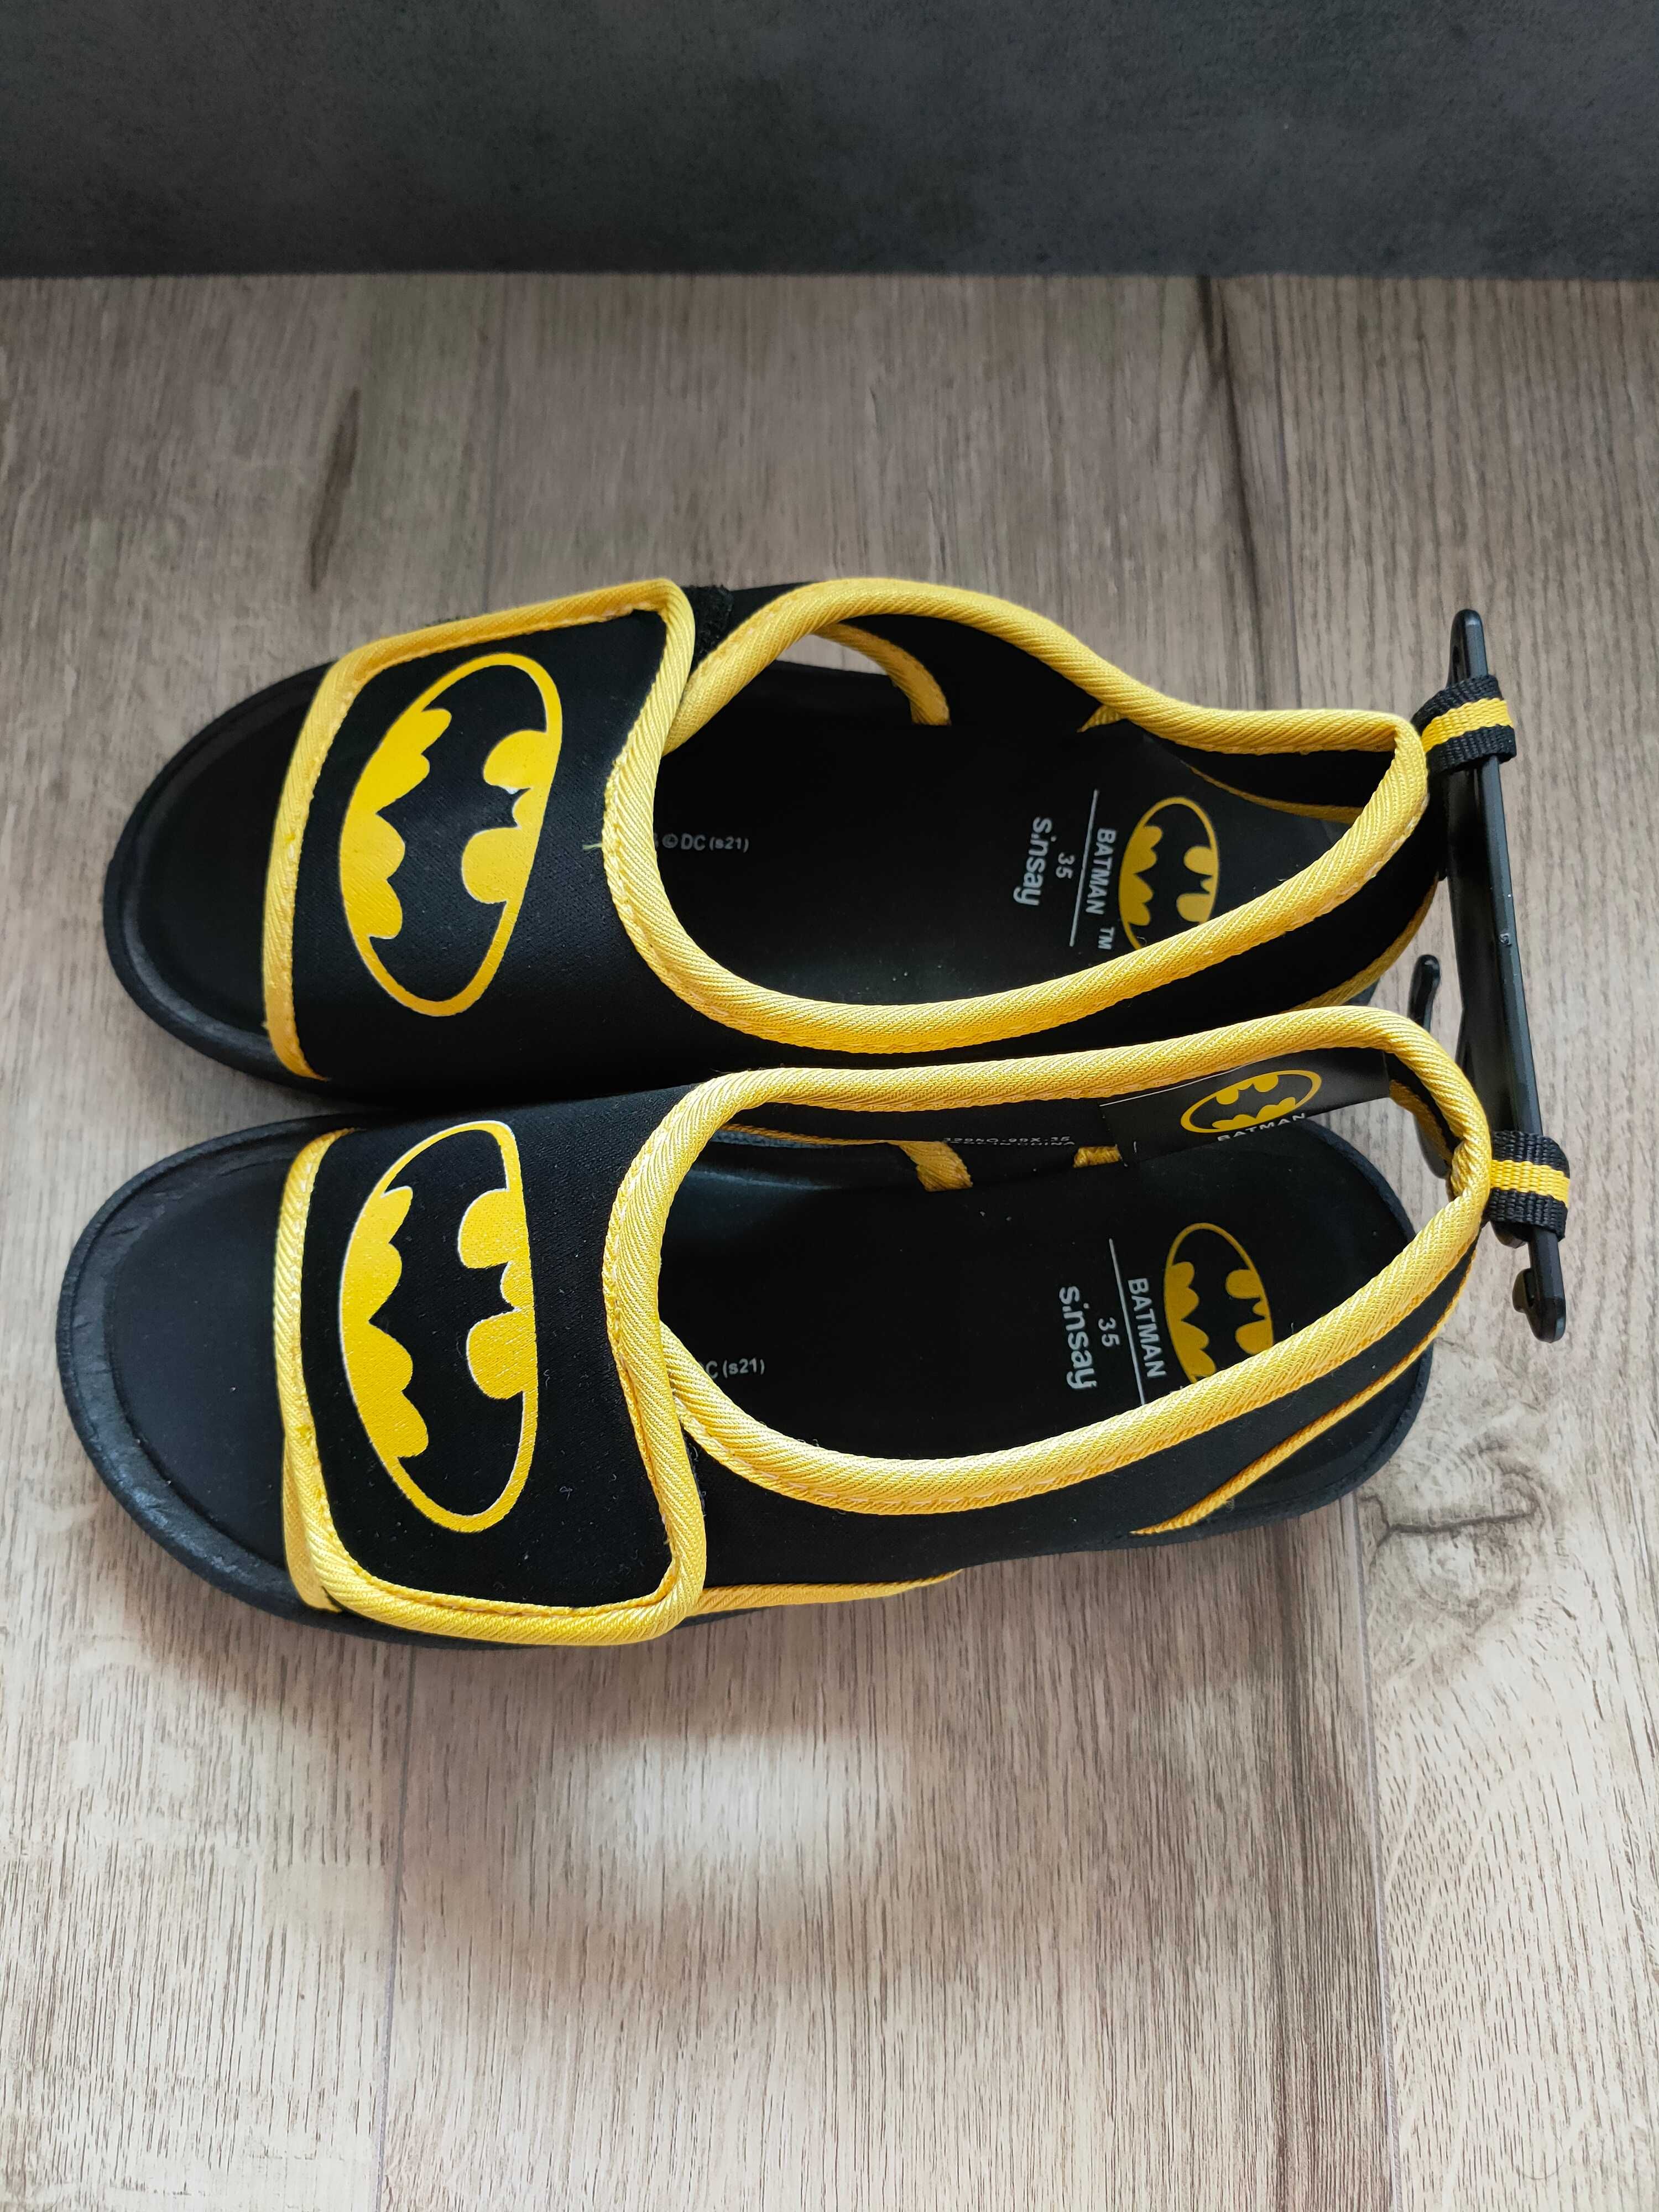 sandale BATMAN pentru baieti (marimea 35) noi cu eticheta